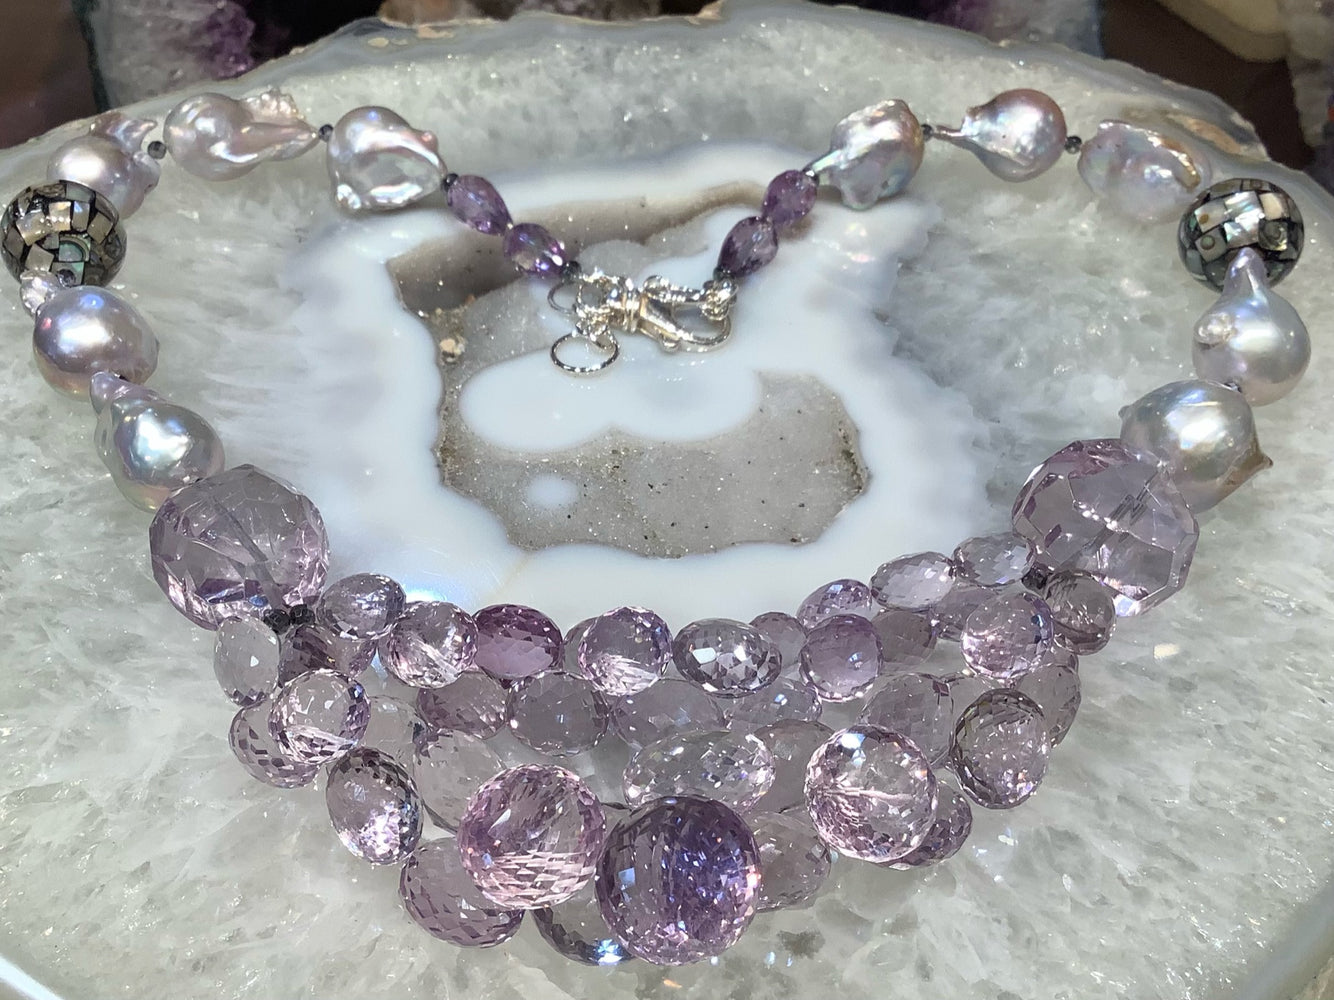 Exquisite Baroque Pearls, Brazil Amethyst, Lavender Amethyst Gemstone Necklace